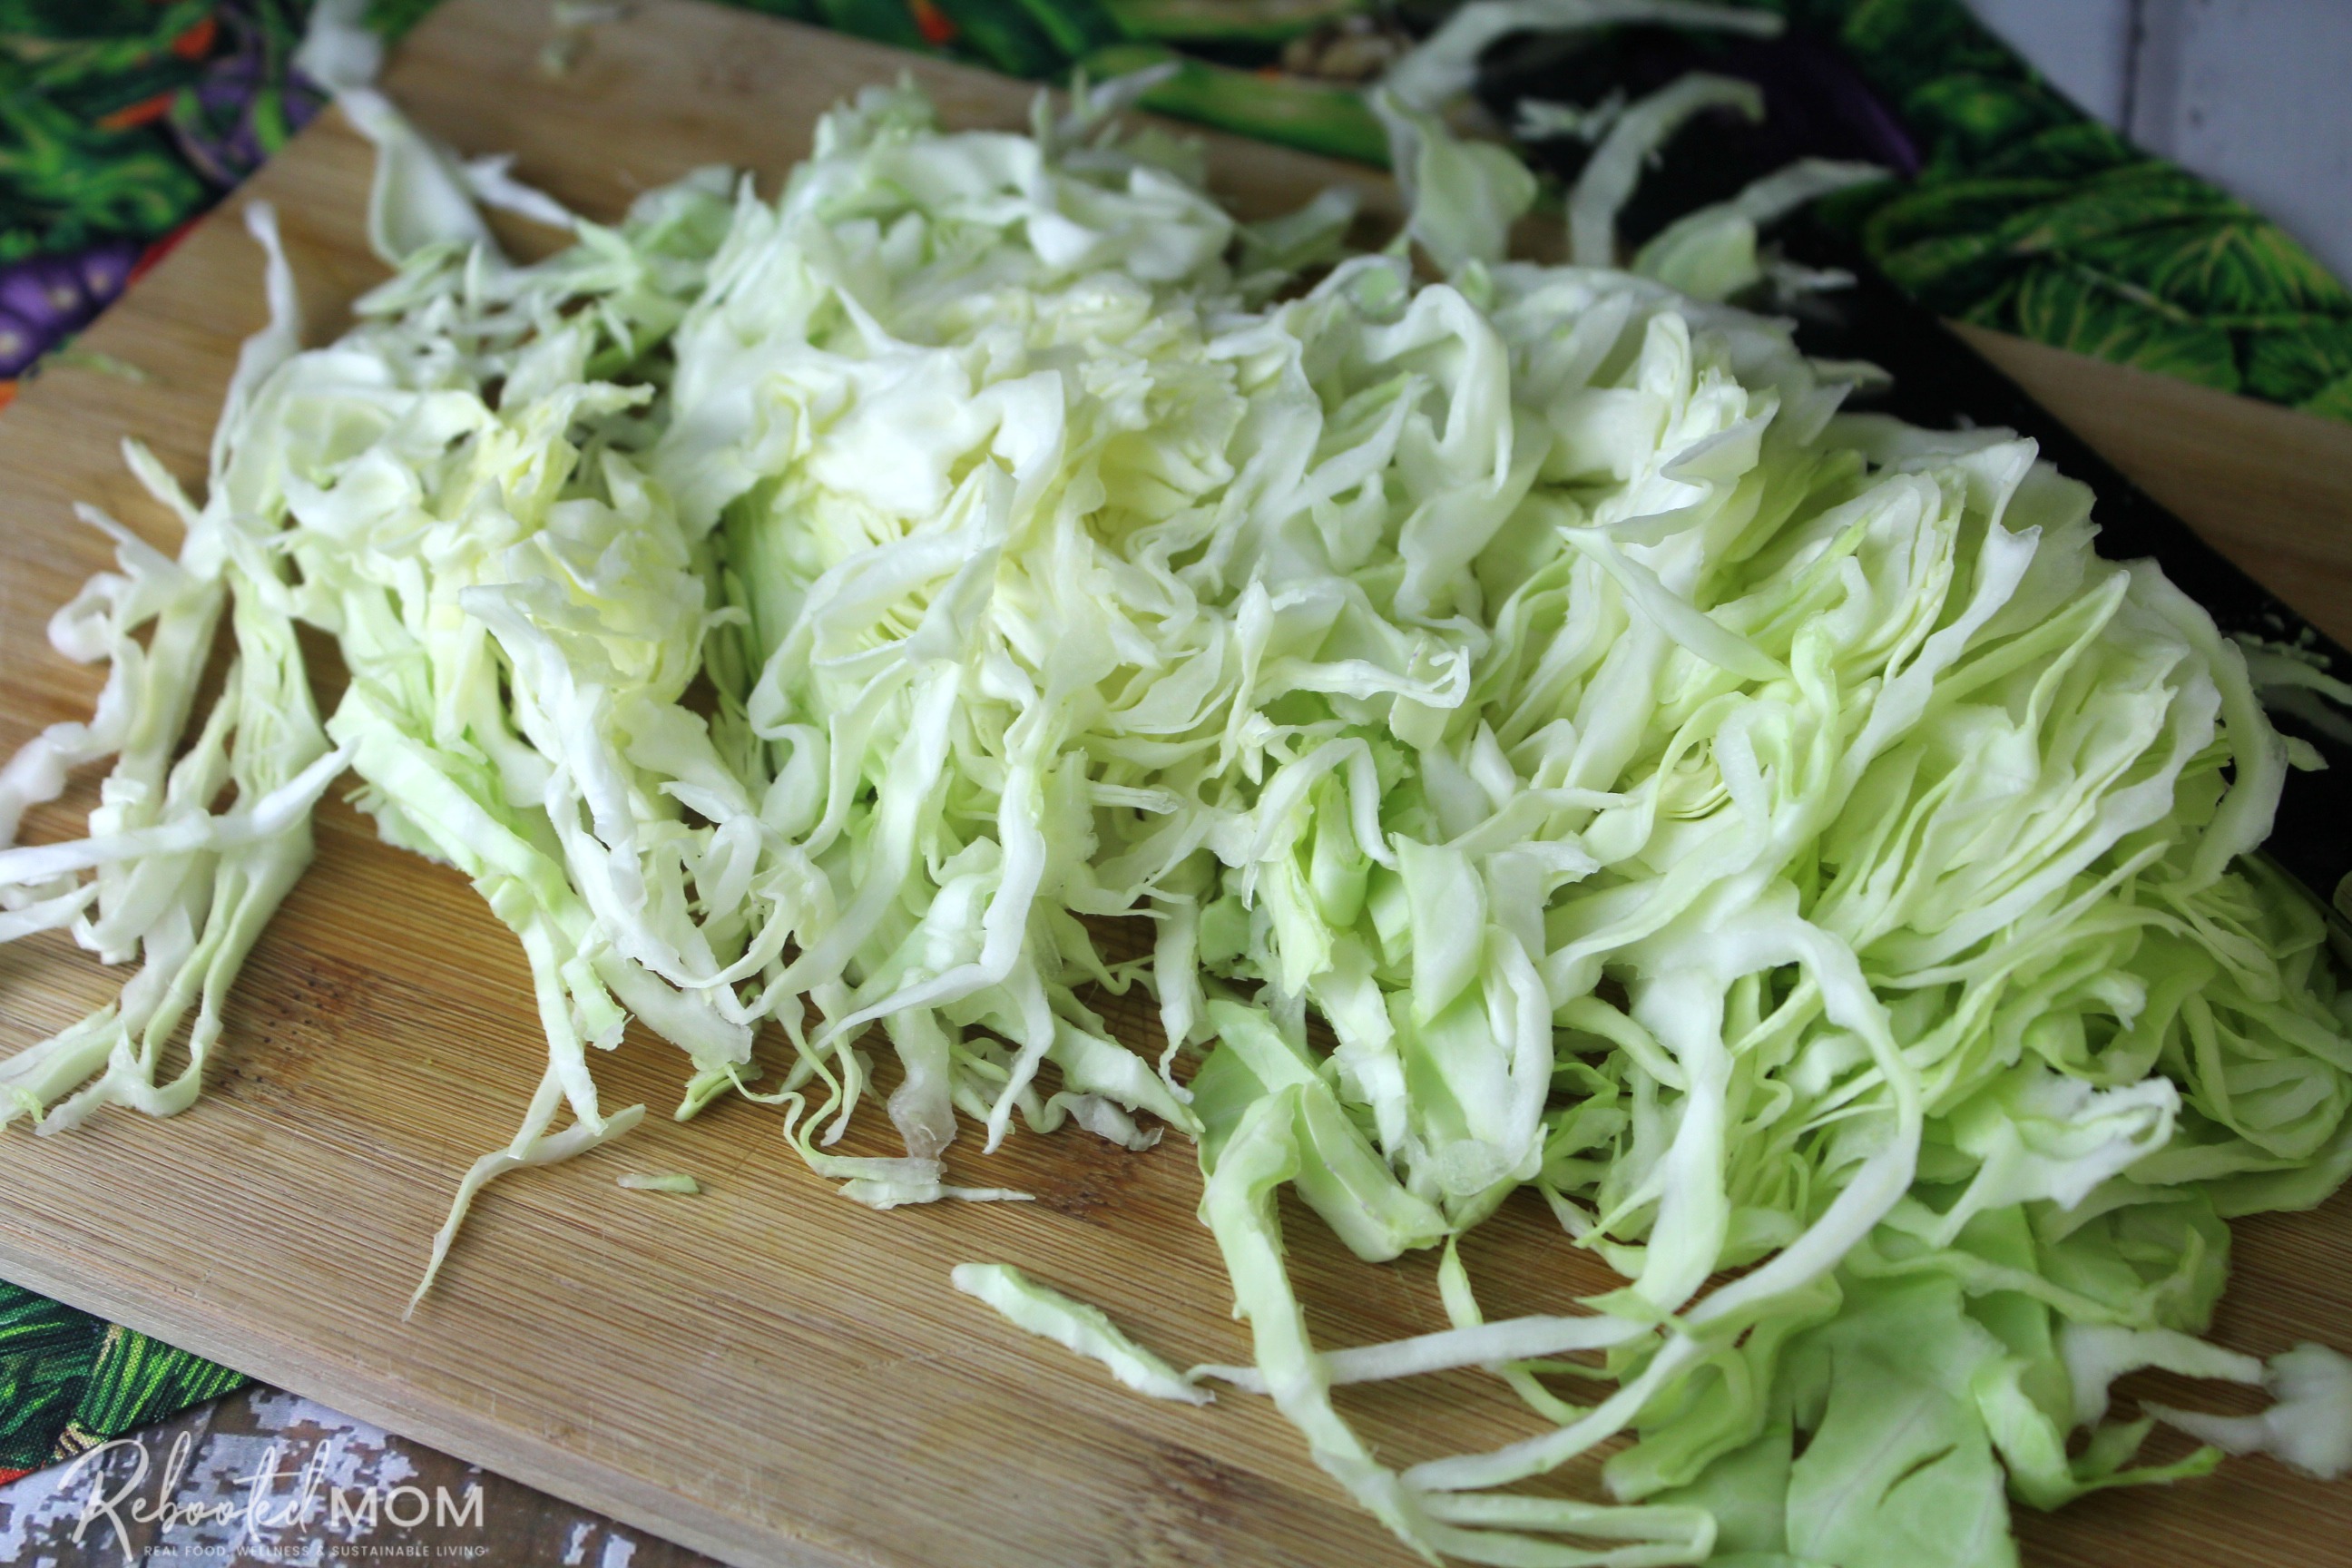 Sliced cabbage